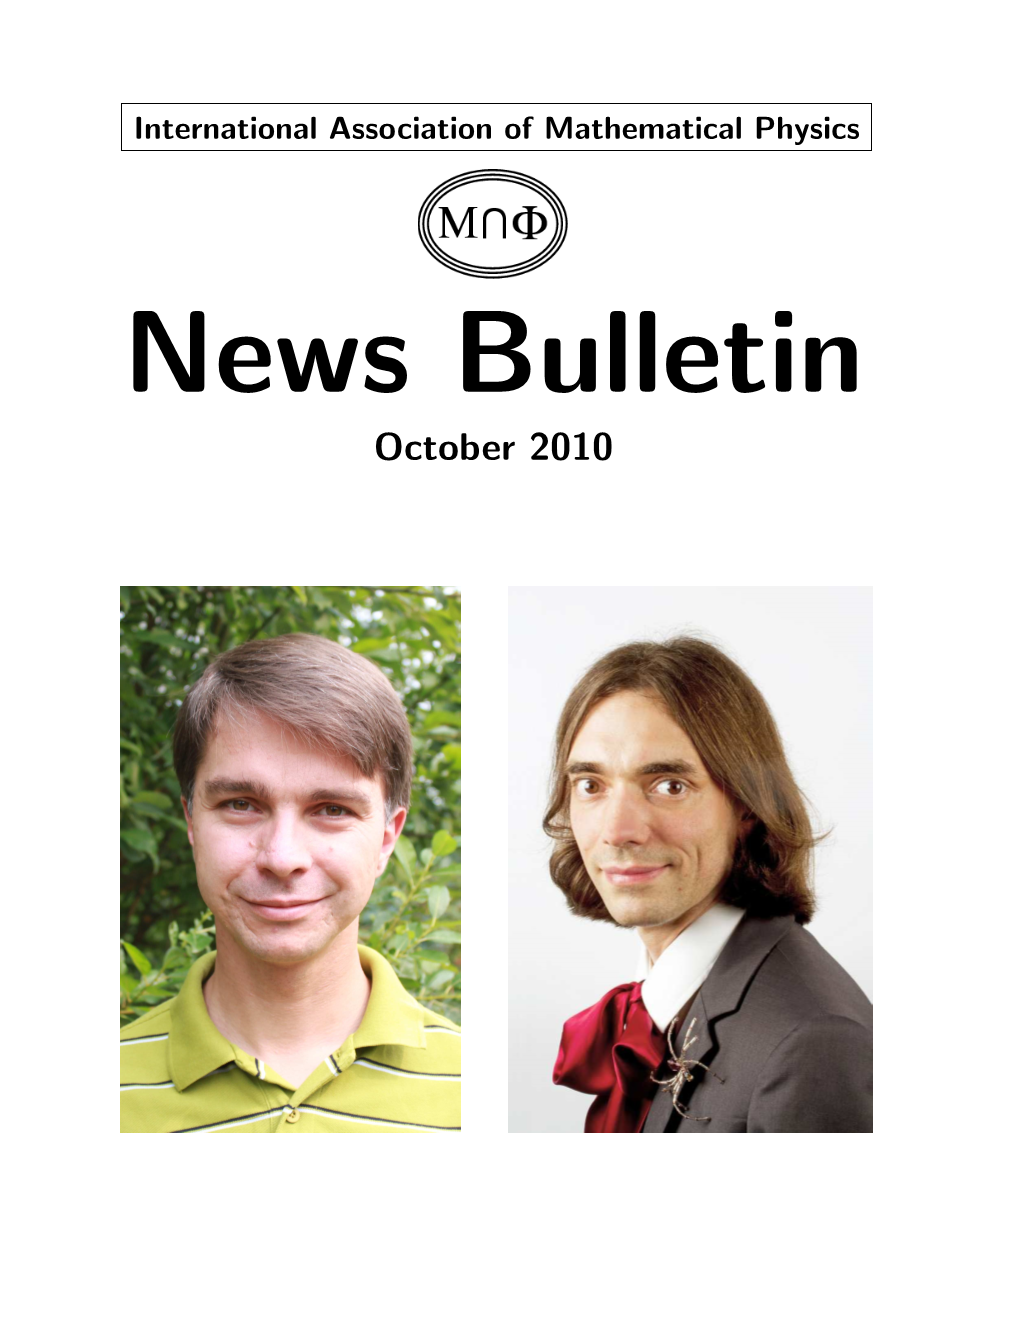 IAMP News Bulletin, October 2010 Editorial